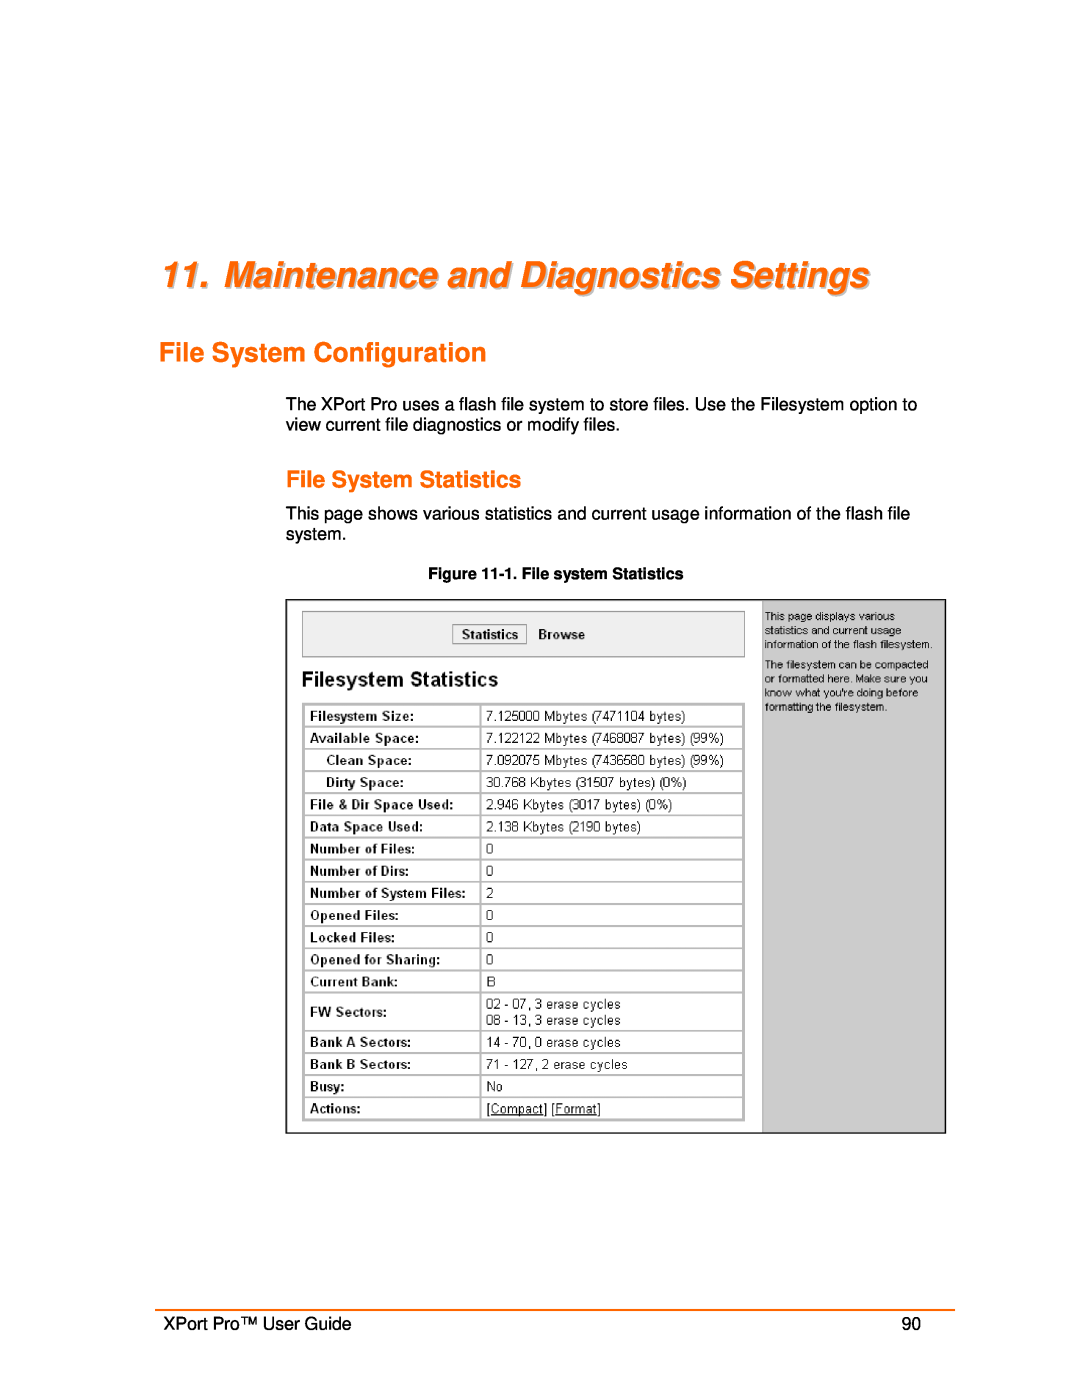 Lantronix 900-560 manual Maintenance and Diagnostics Settings, File System Configuration, File System Statistics 